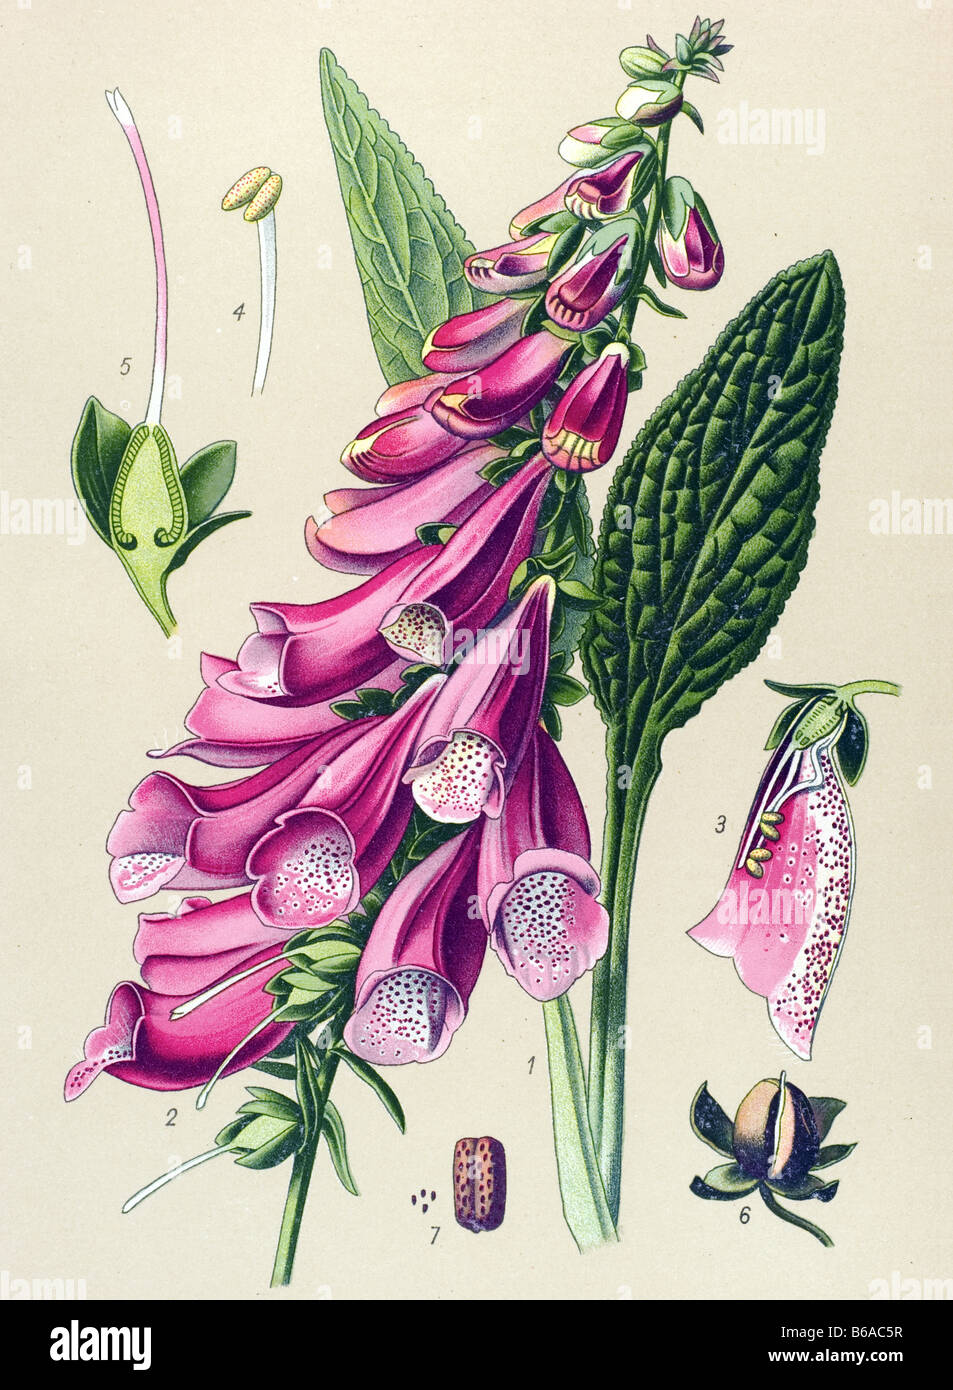 Foxglove, Digitalis purpurea, poisonous plants illustrations Stock Photo